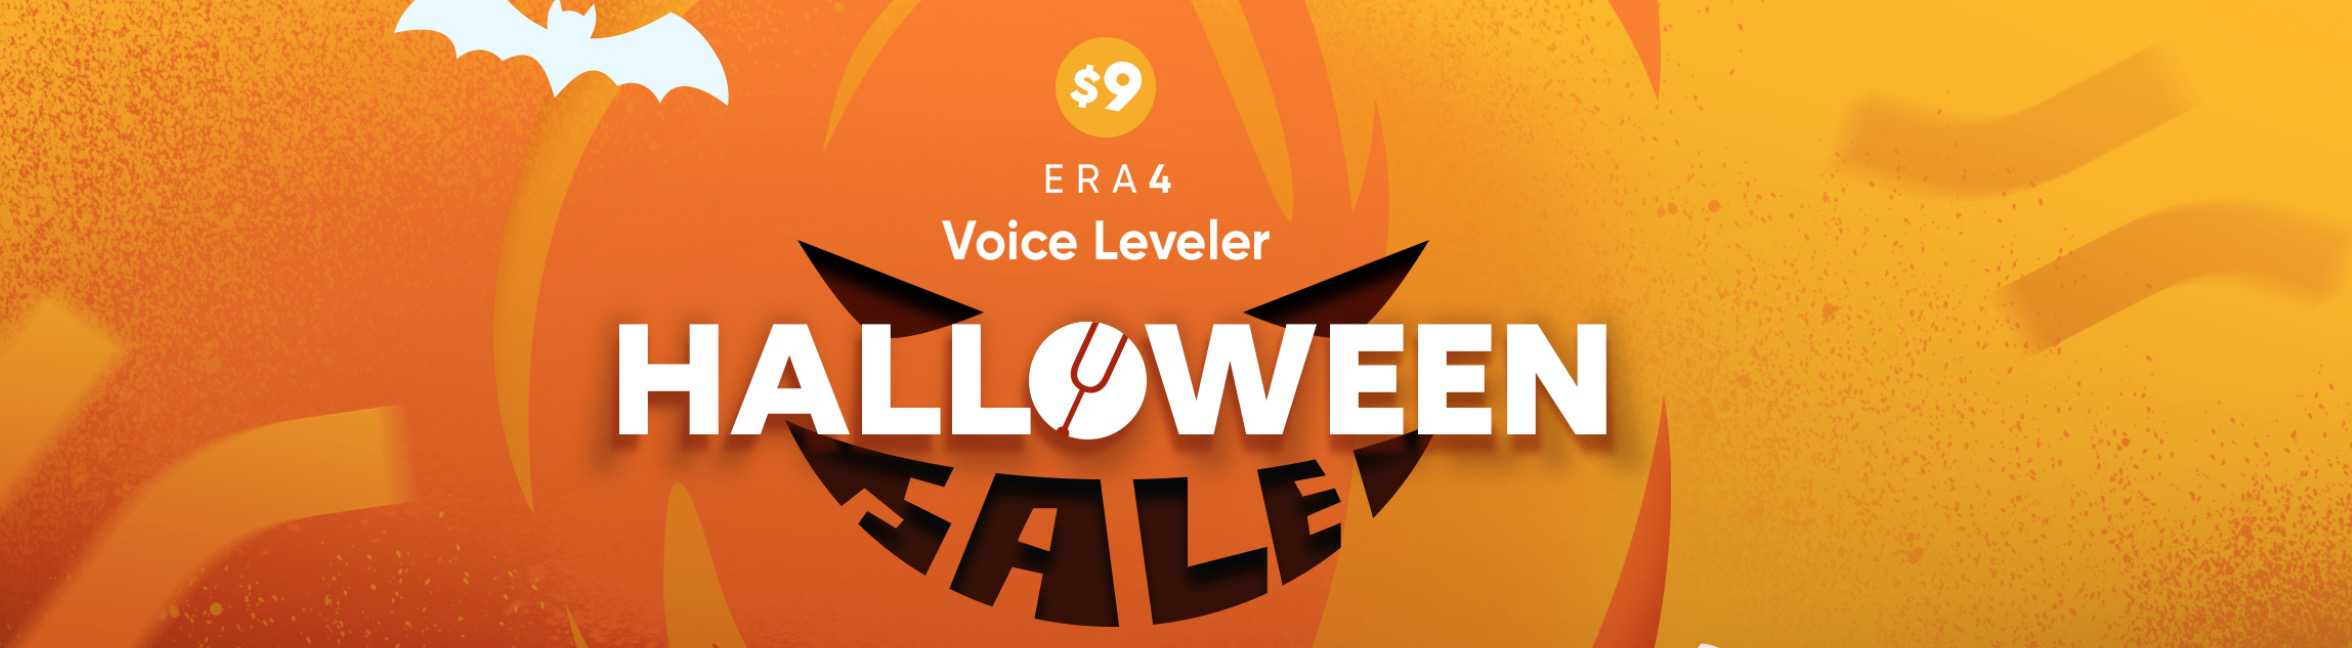 ERA 4 Voice Leveler – HALLOWEEN SALE